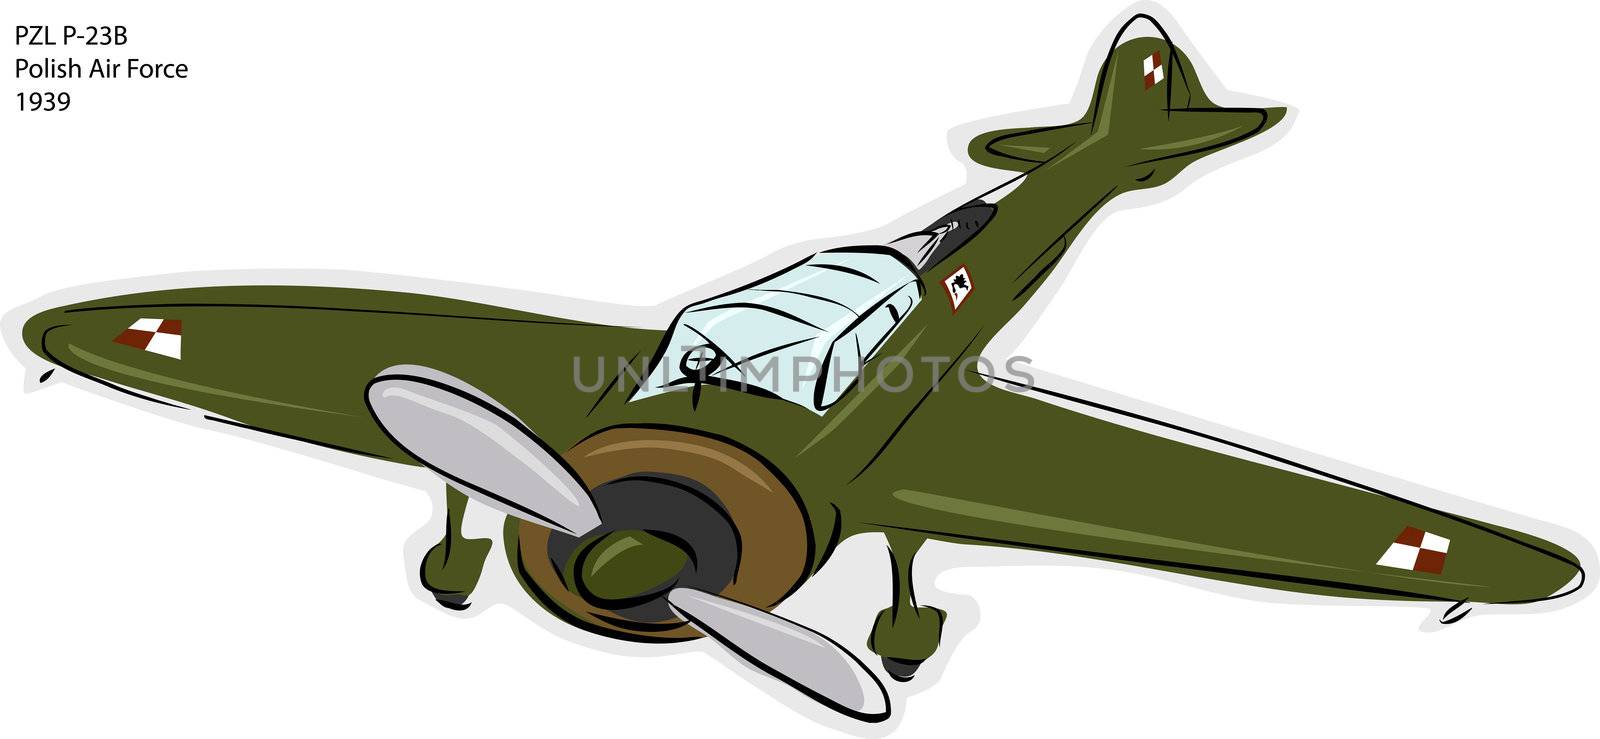 PZL P-23B WW2 Combat Plane by TheBlackRhino